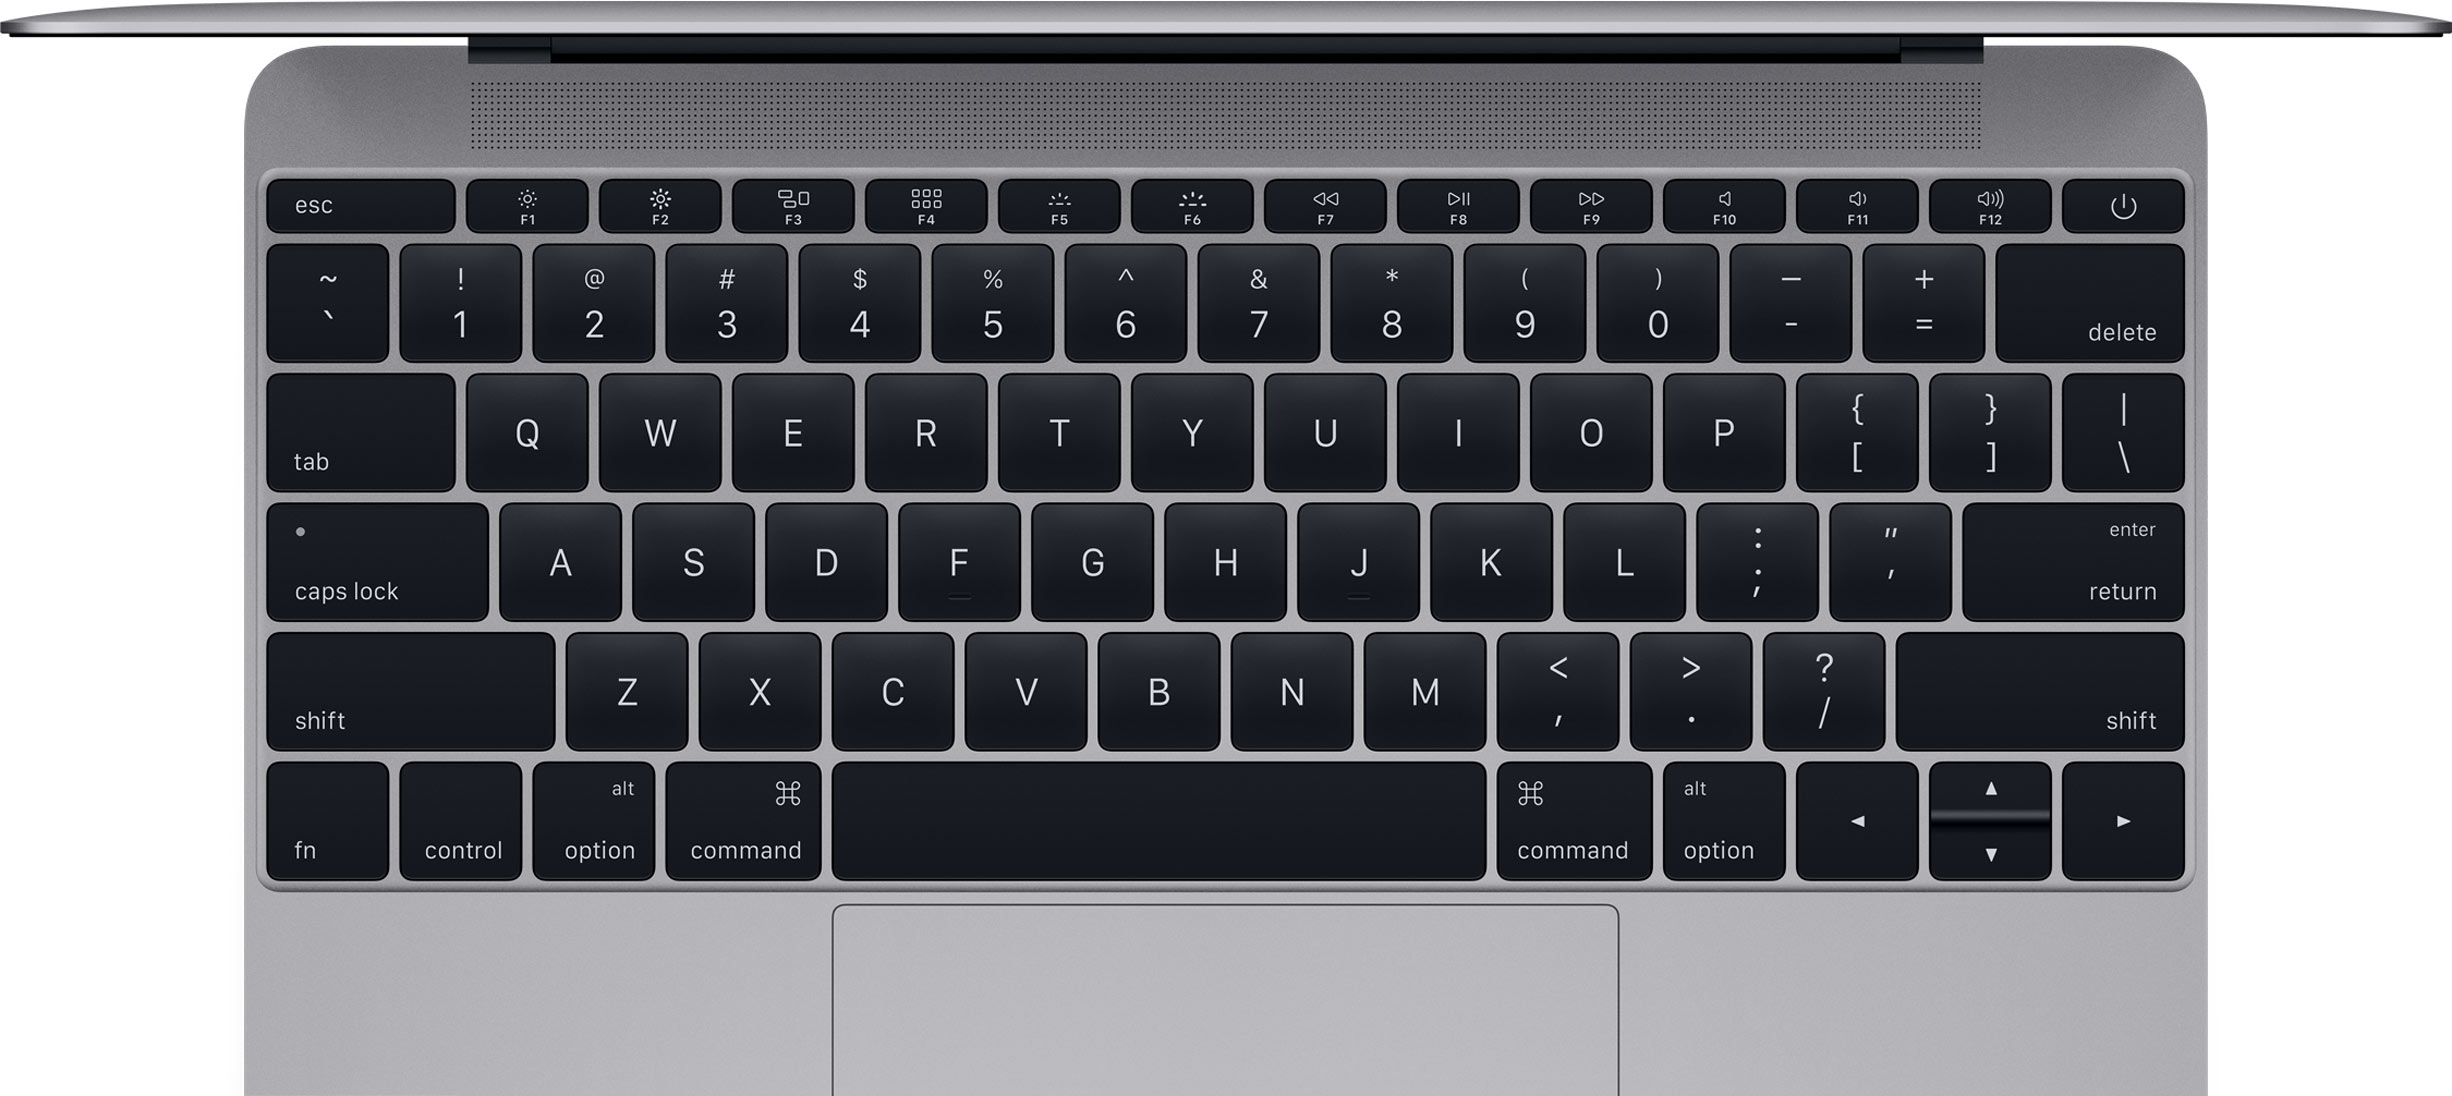 cleaning keyboard on macbook pro